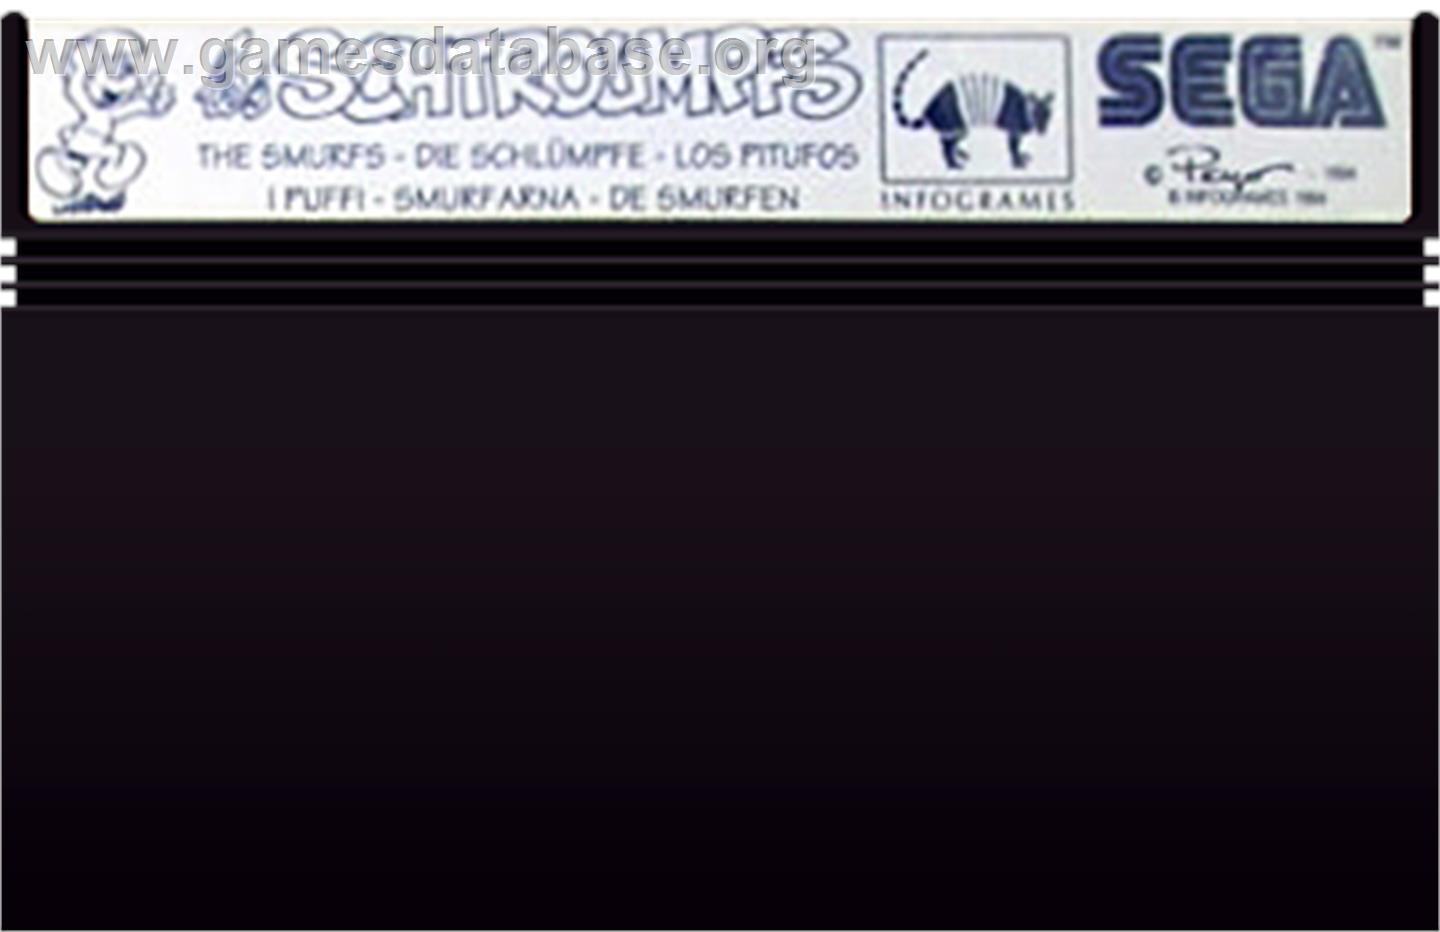 Smurfs - Sega Master System - Artwork - Cartridge